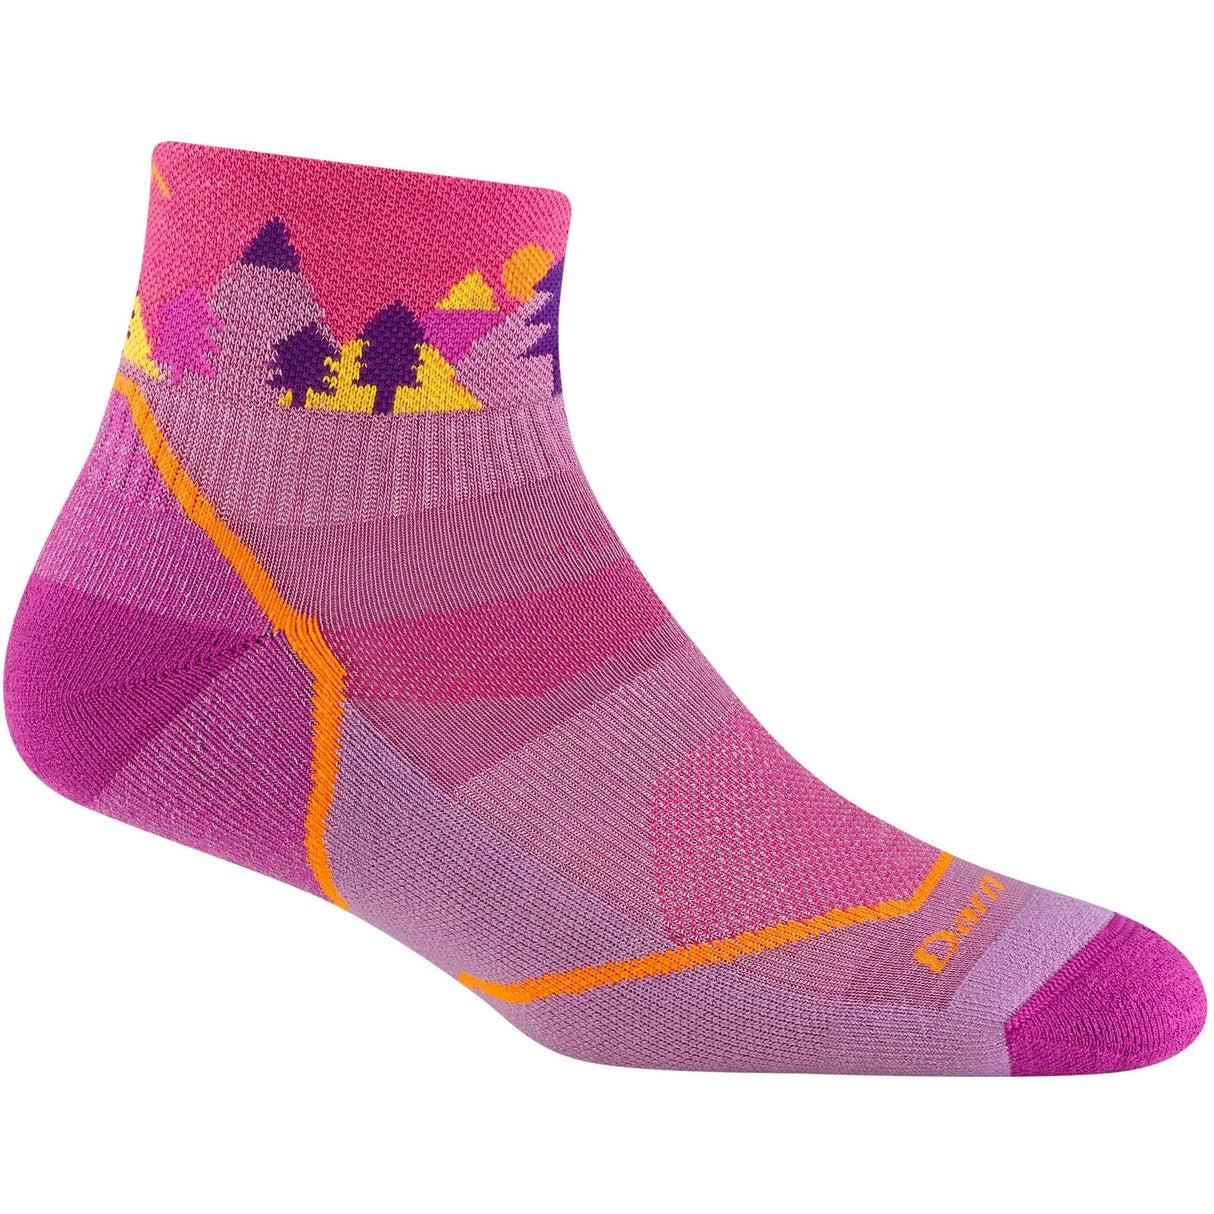 Darn Tough Kids Quest Quarter Lightweight Hiking Socks  -  Small / Violet